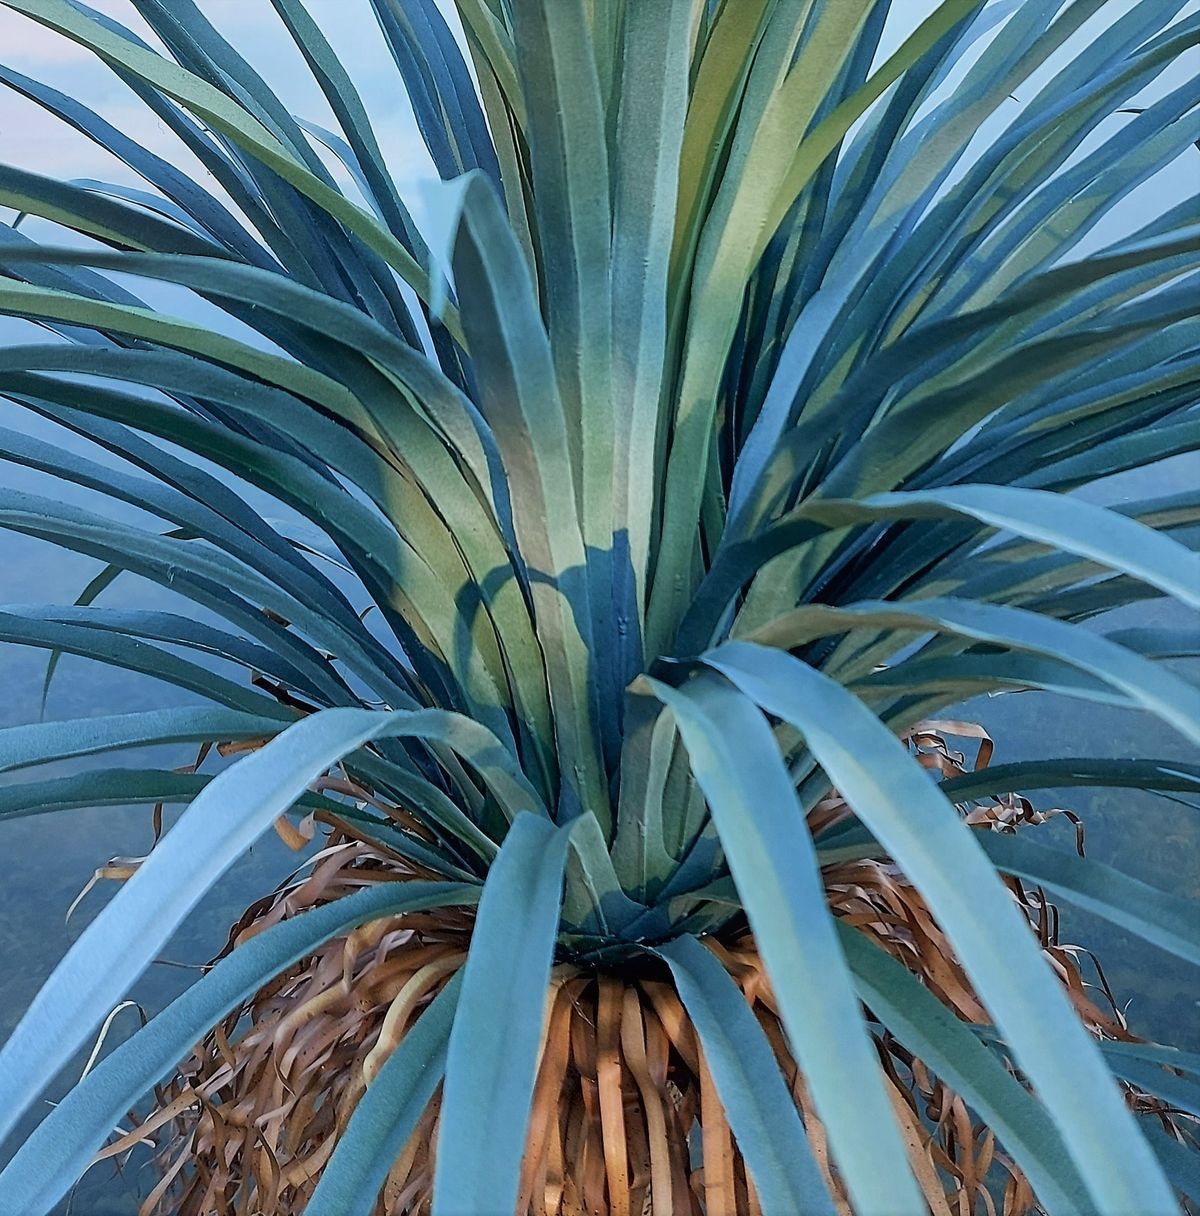 Kunstpalme Yucca im Topf, 160 cm, grün-grau